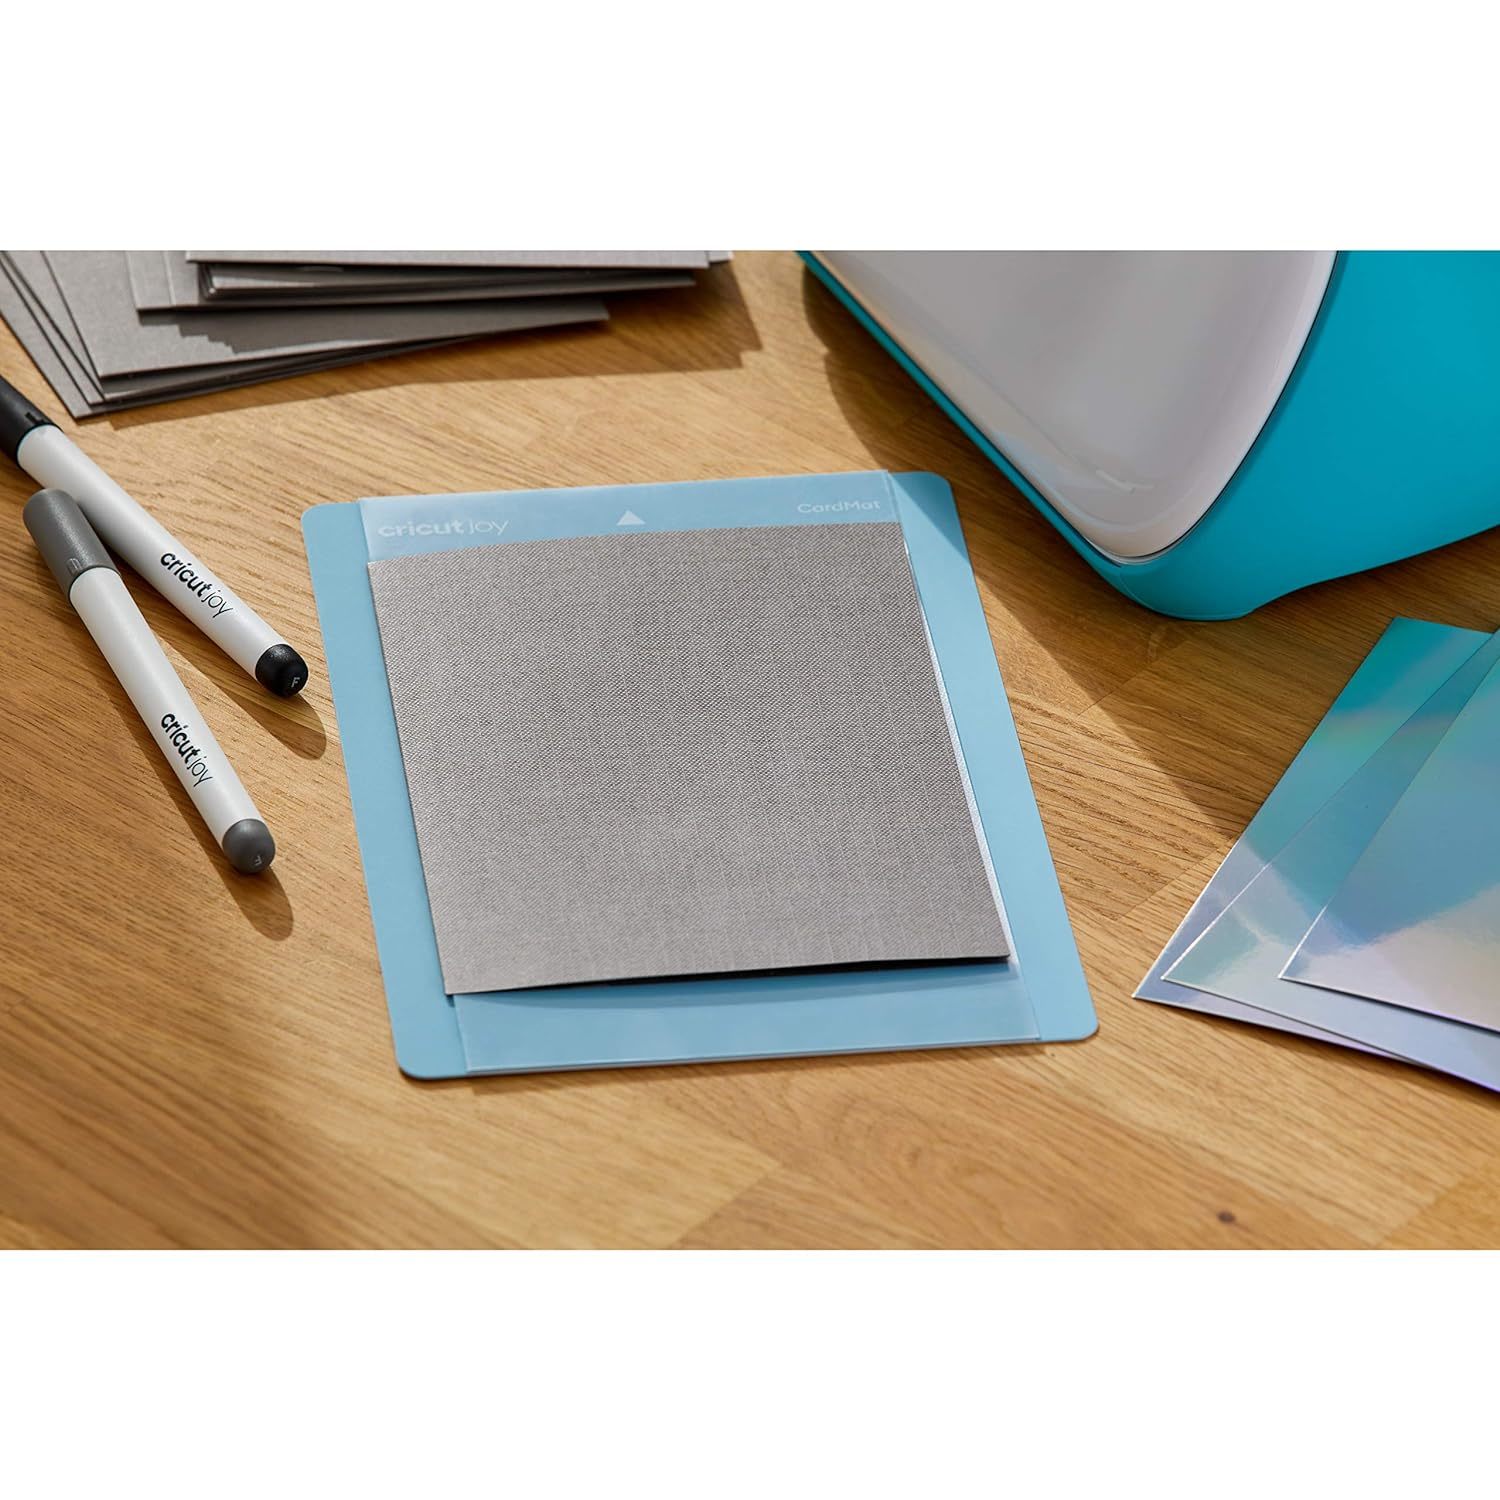 Cricut Joy Insert Cards Small, Gray/Silver Holographic